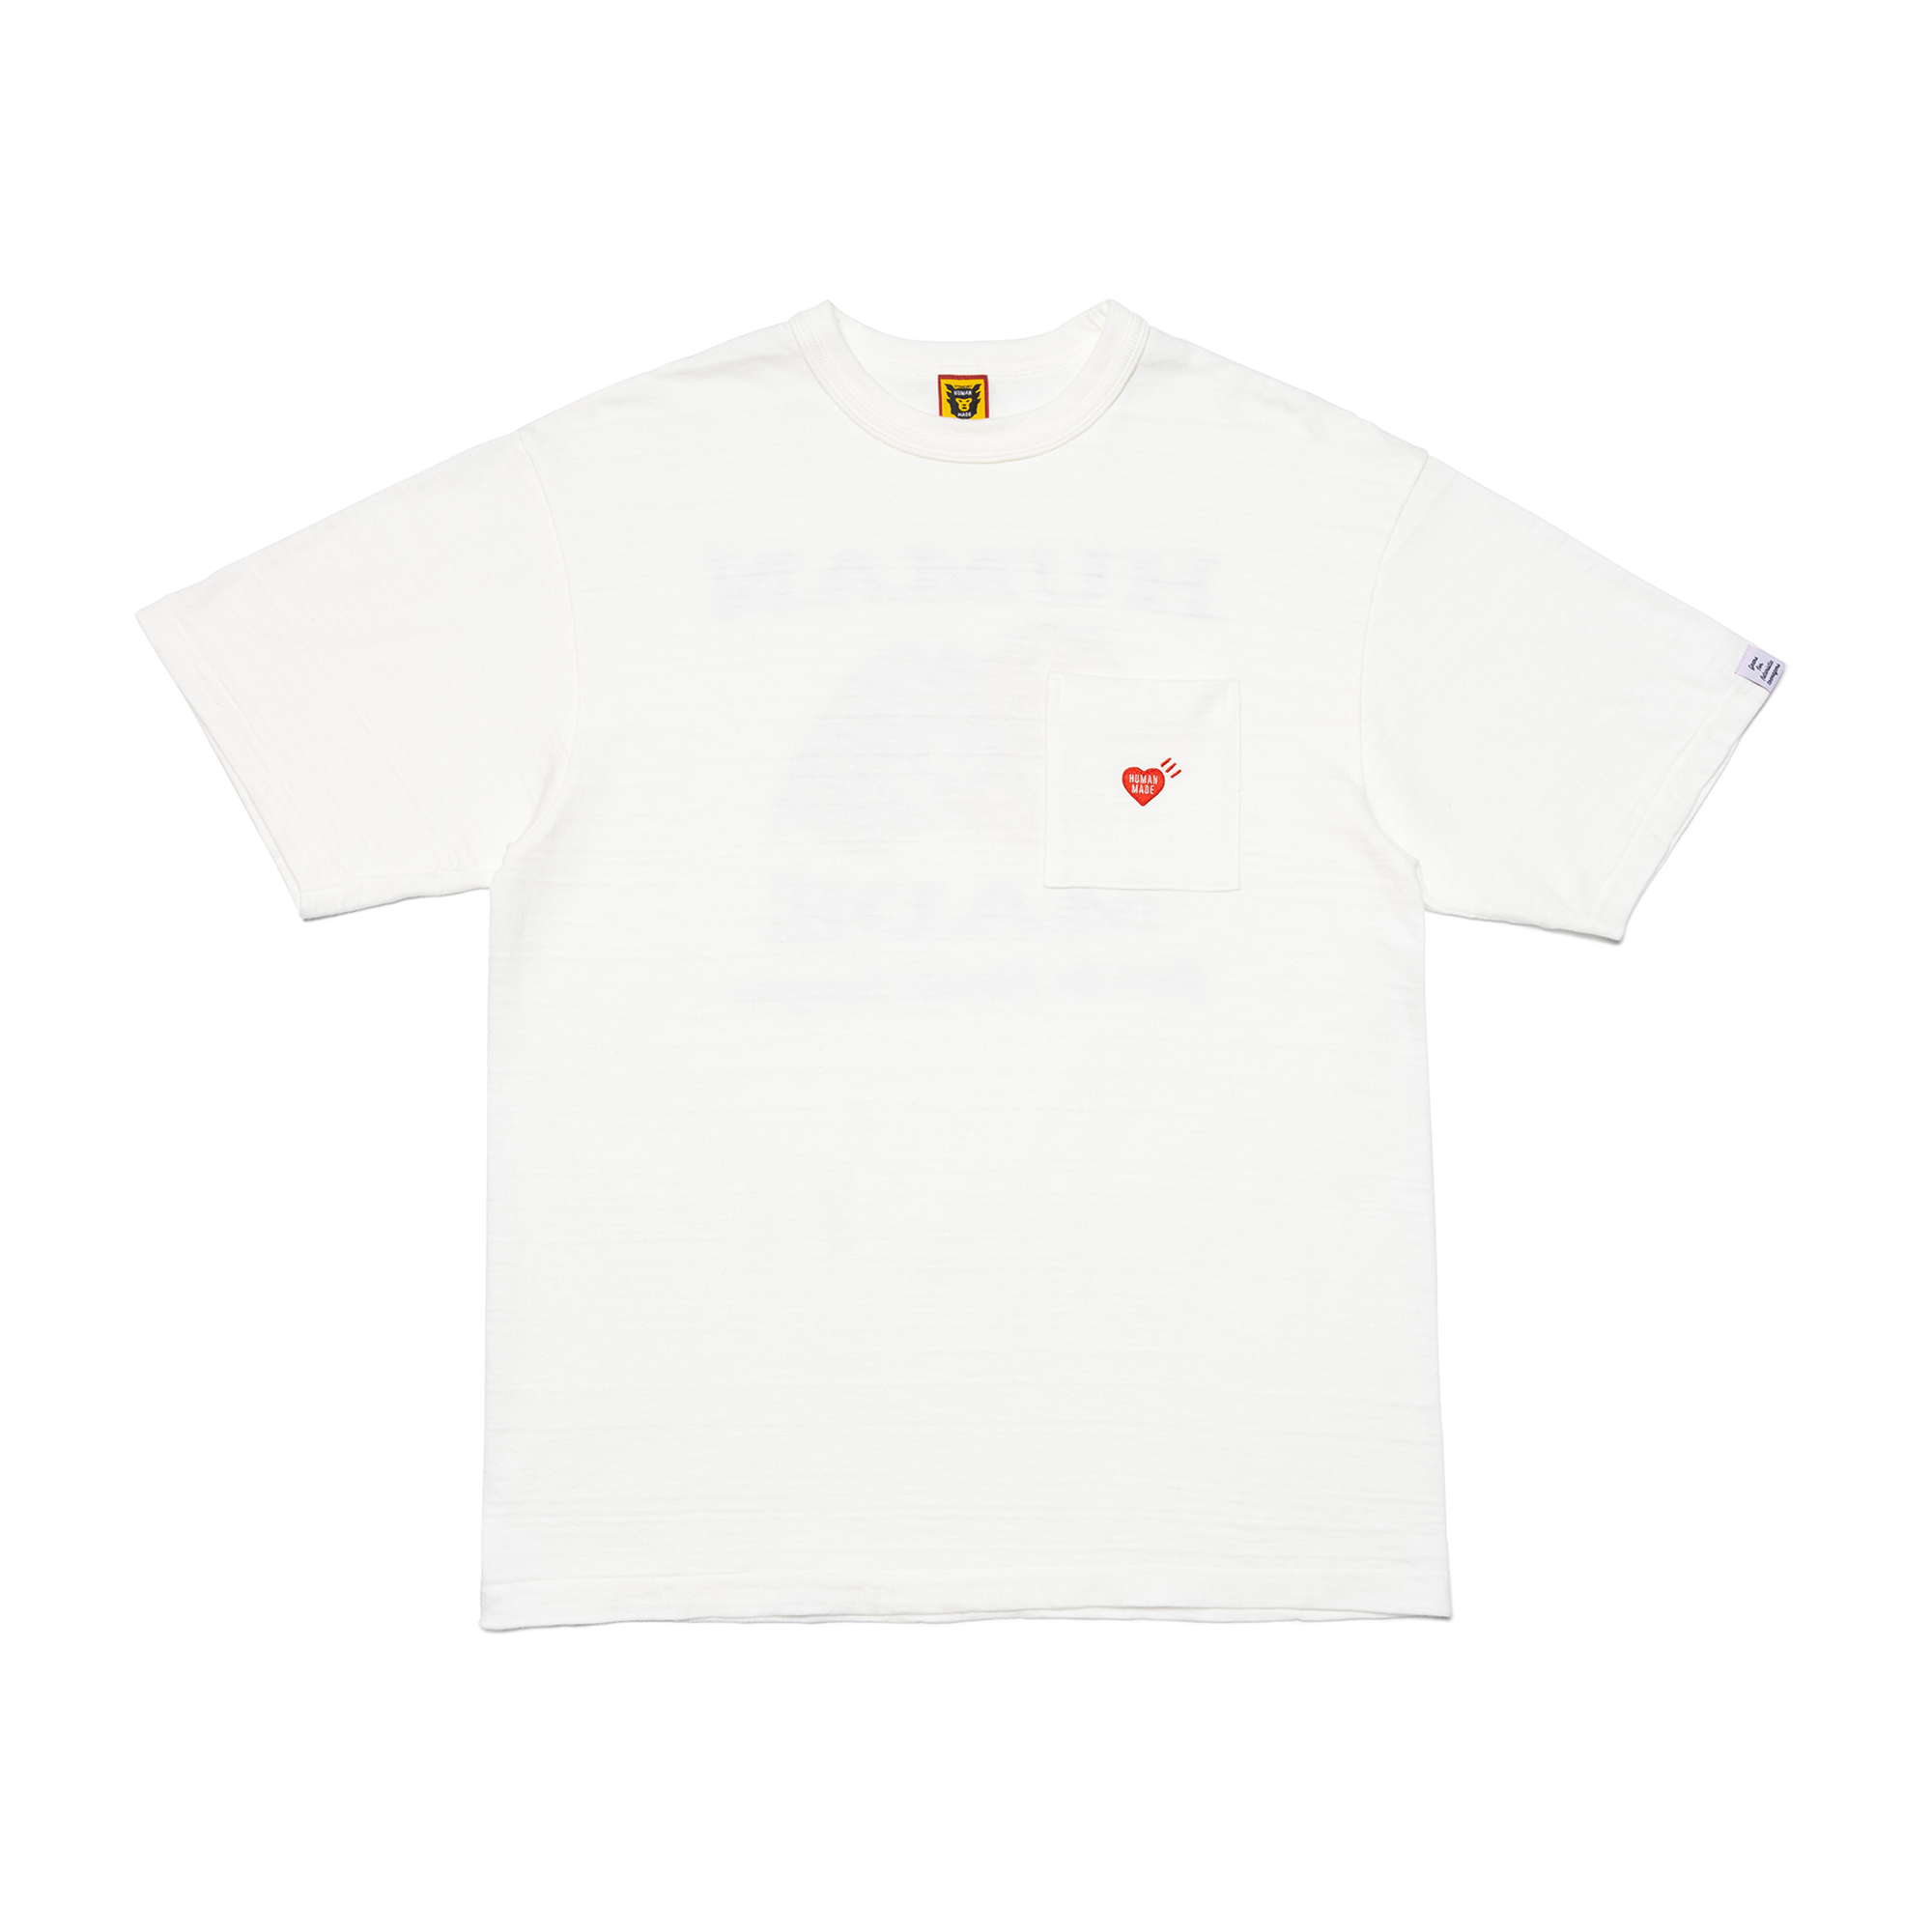 Human Made Pocket T-Shirt #2 White HM26CS003 – Laced